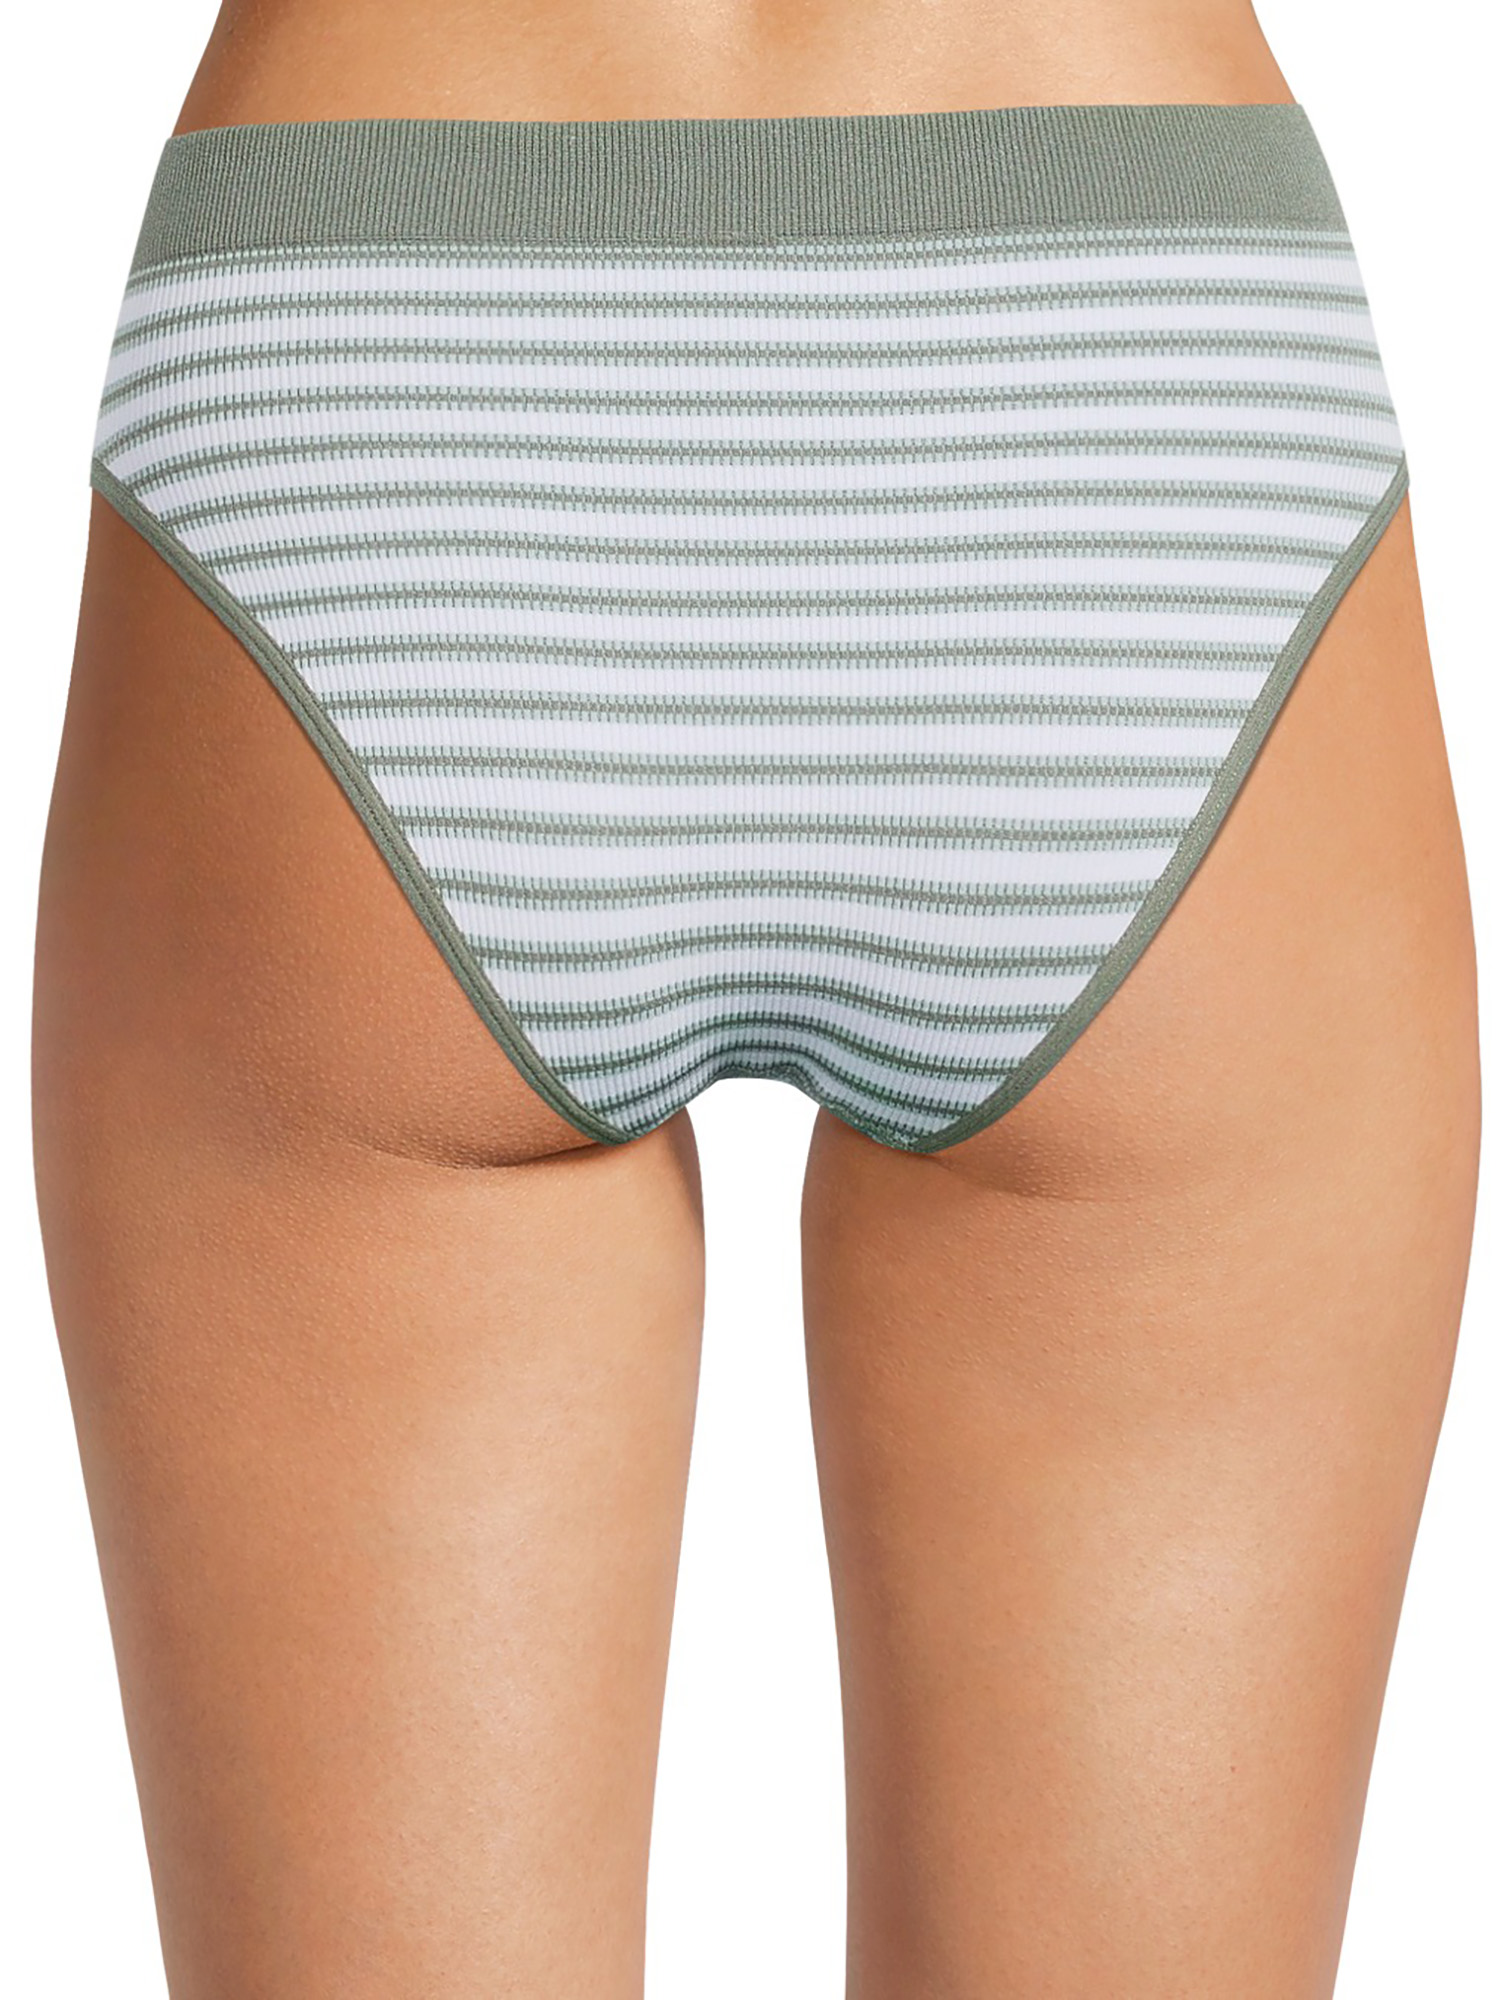 No Boundaries Women's Seamless High Cut Panty, 2-Pack - image 3 of 3